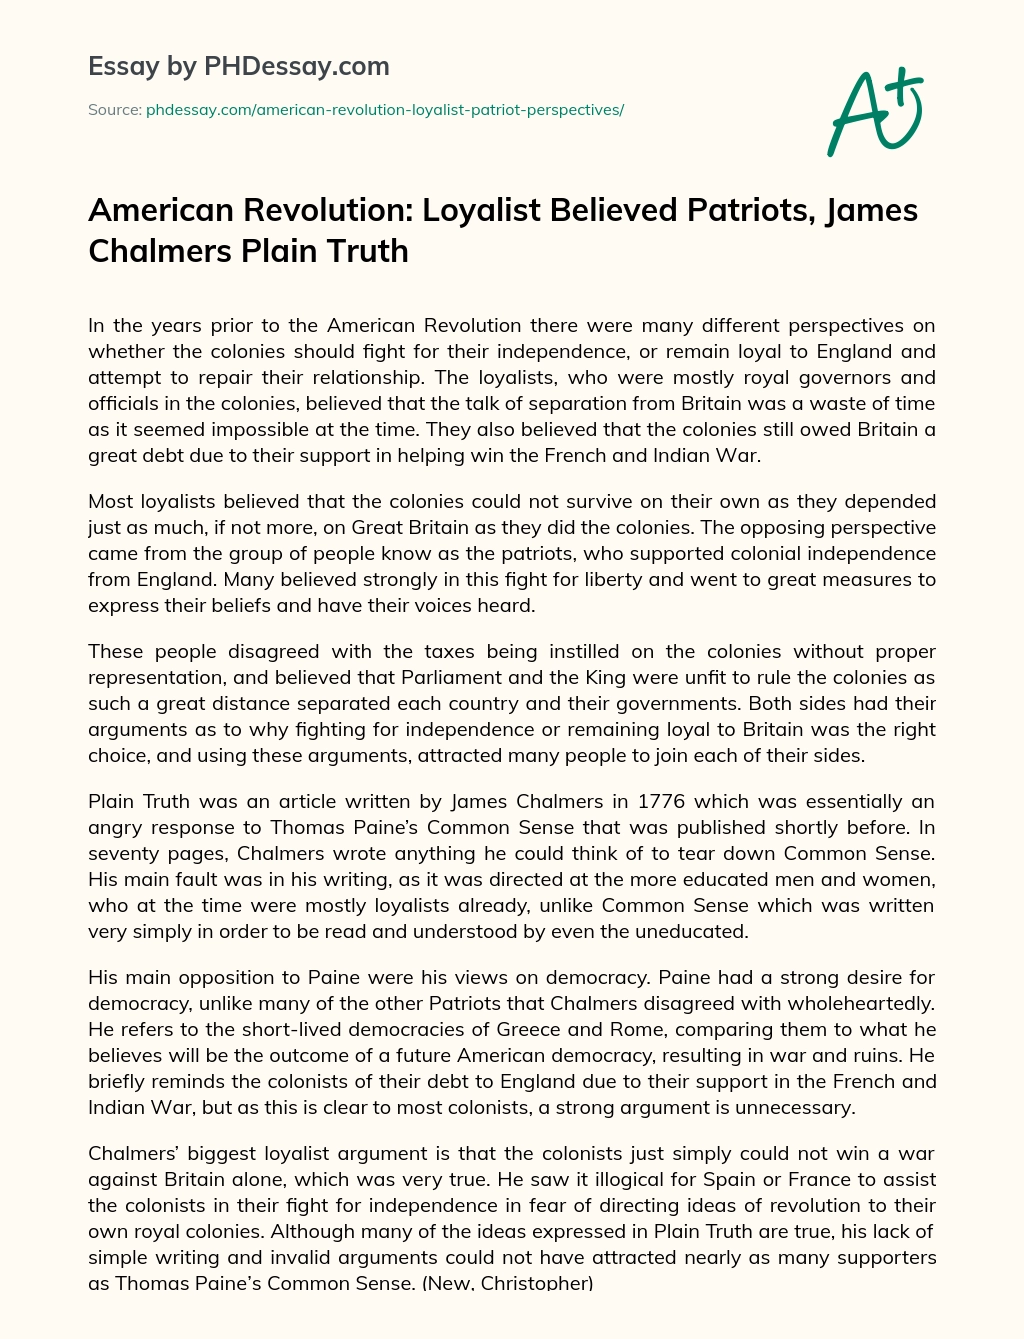 American Revolution: Loyalist Believed Patriots, James Chalmers Plain Truth essay